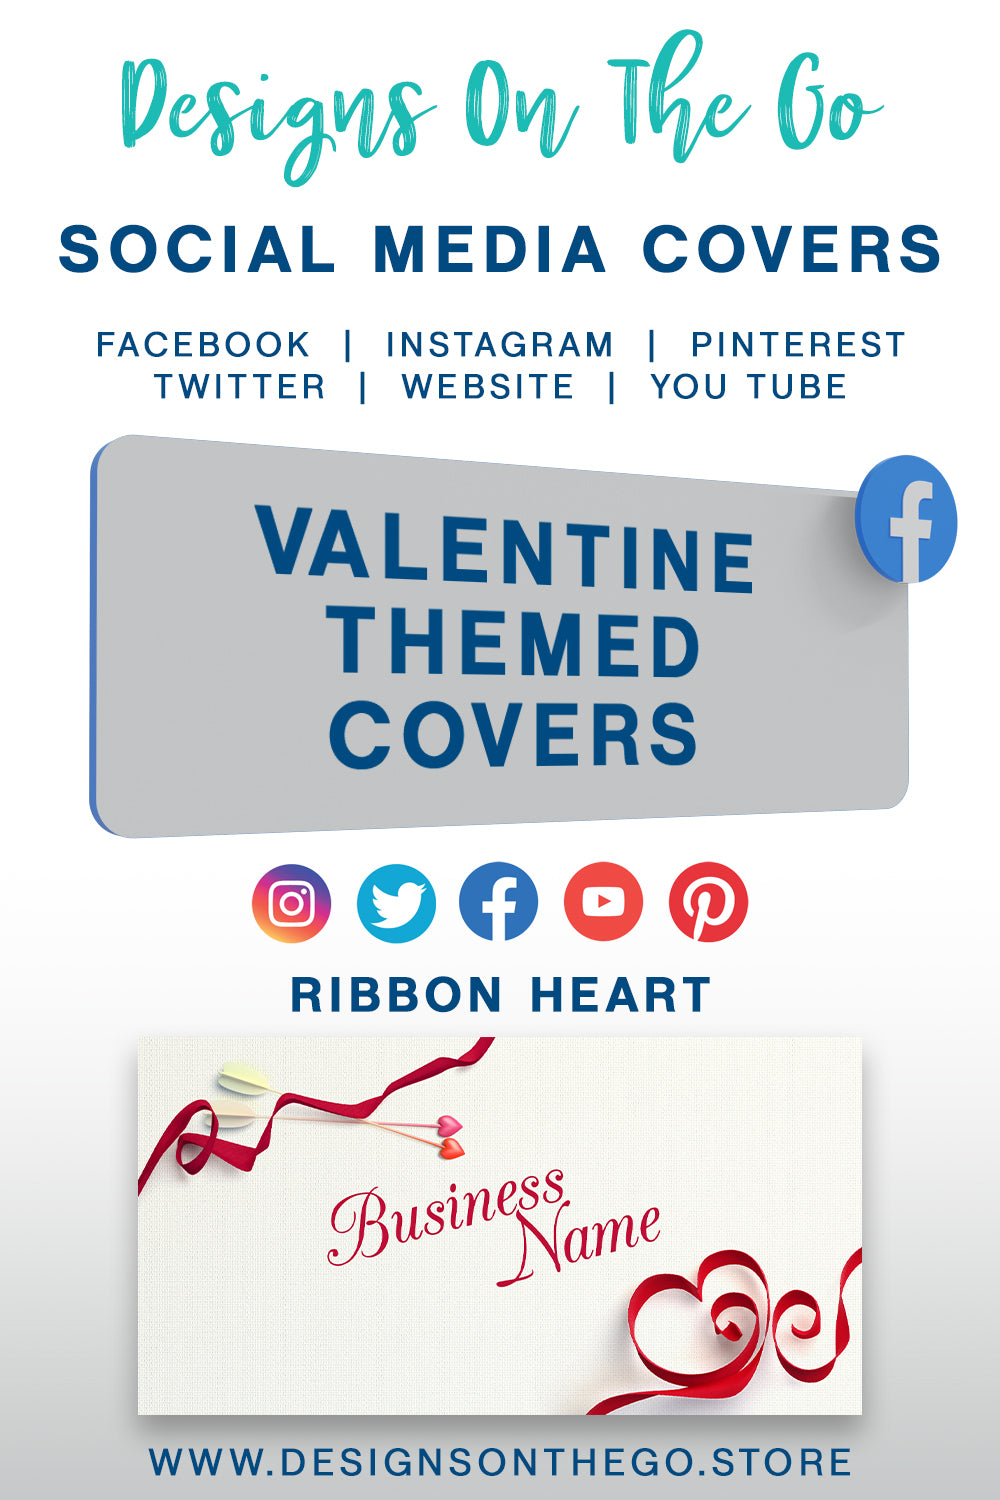 Valentine Themed Social Media Covers